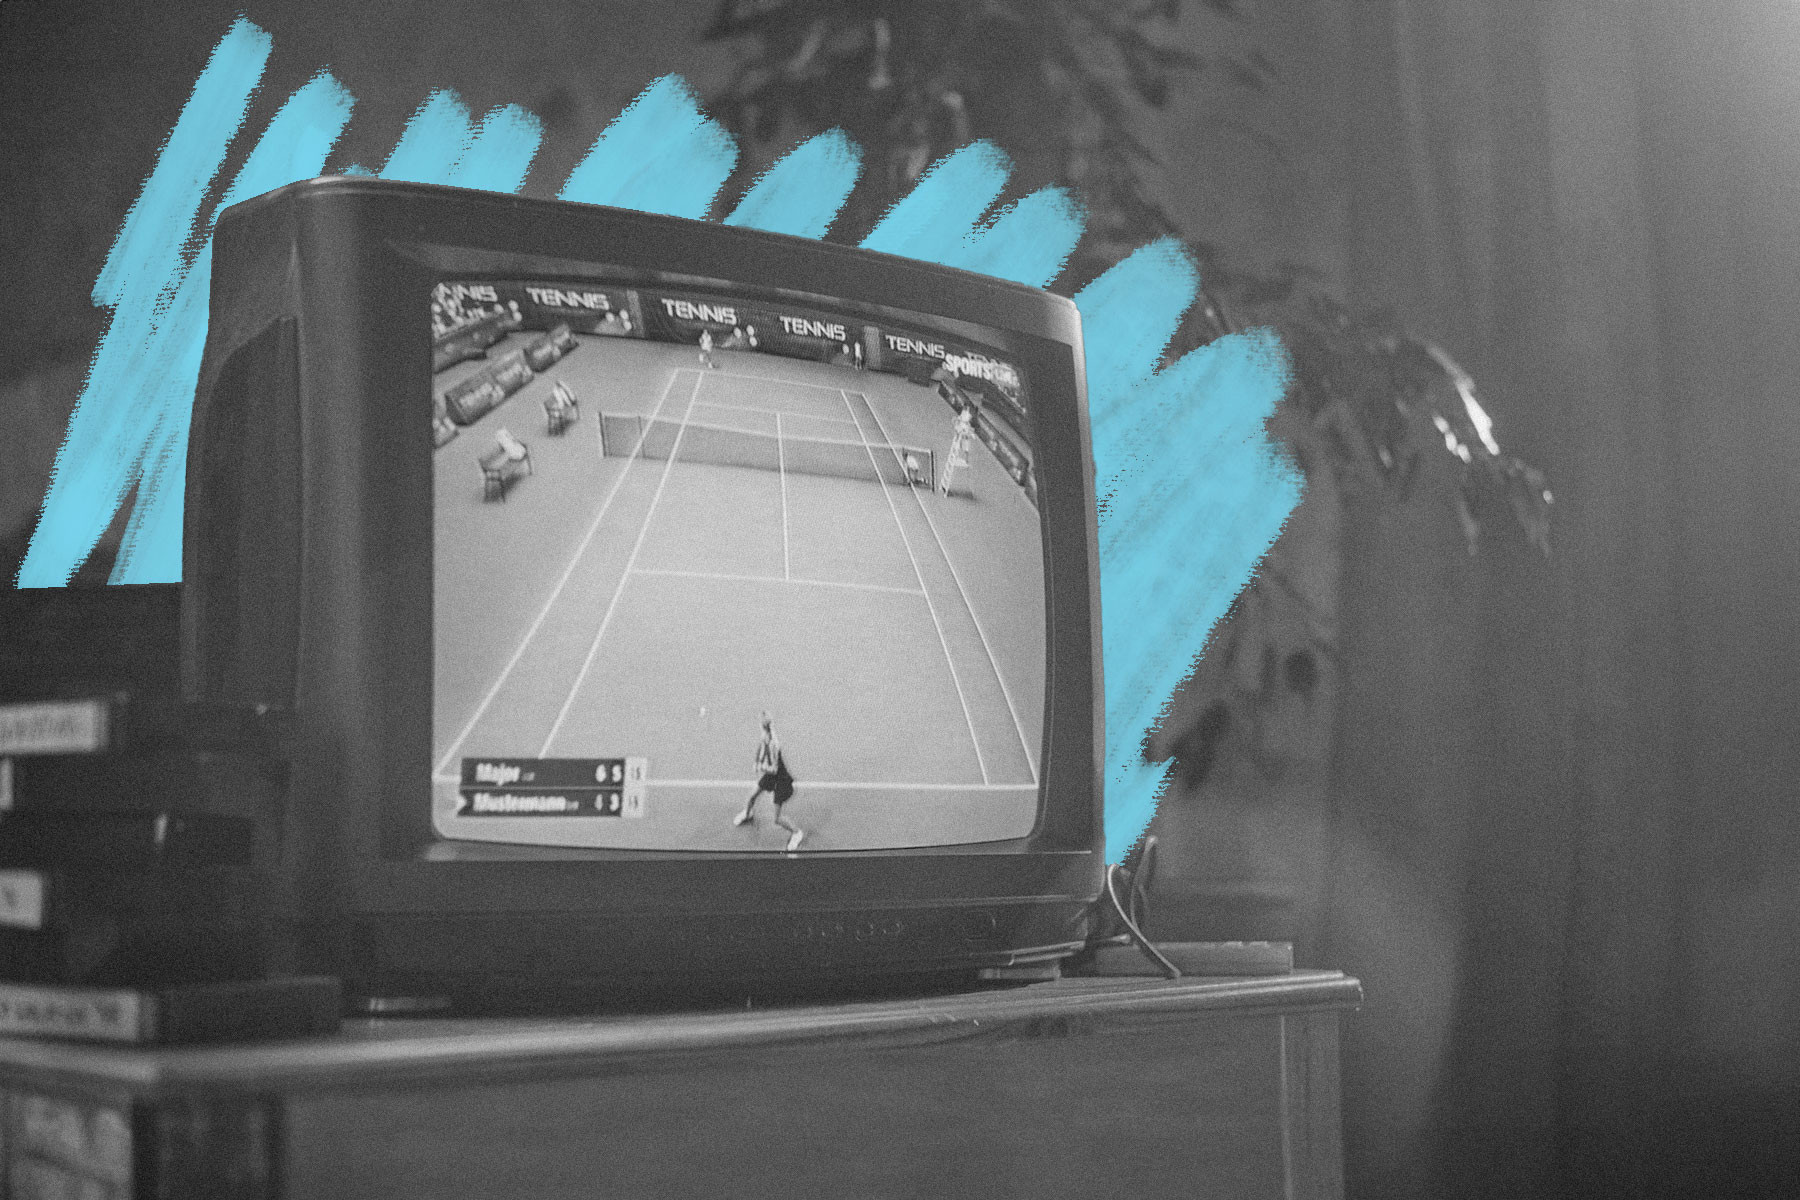 Live tennis broadcast